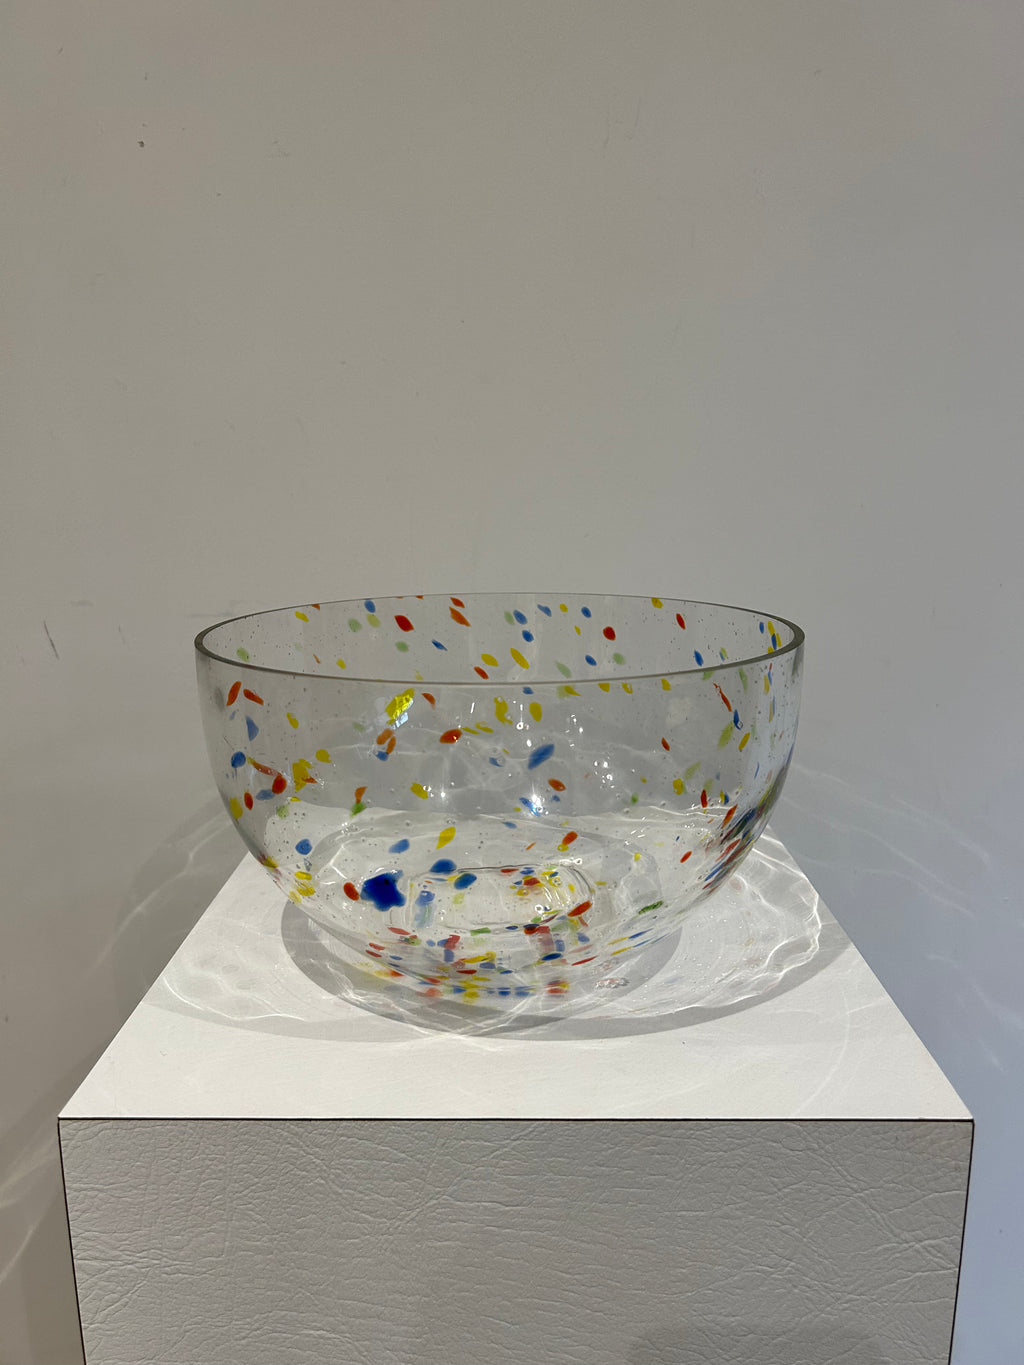 Large colorful confetti glass bowl